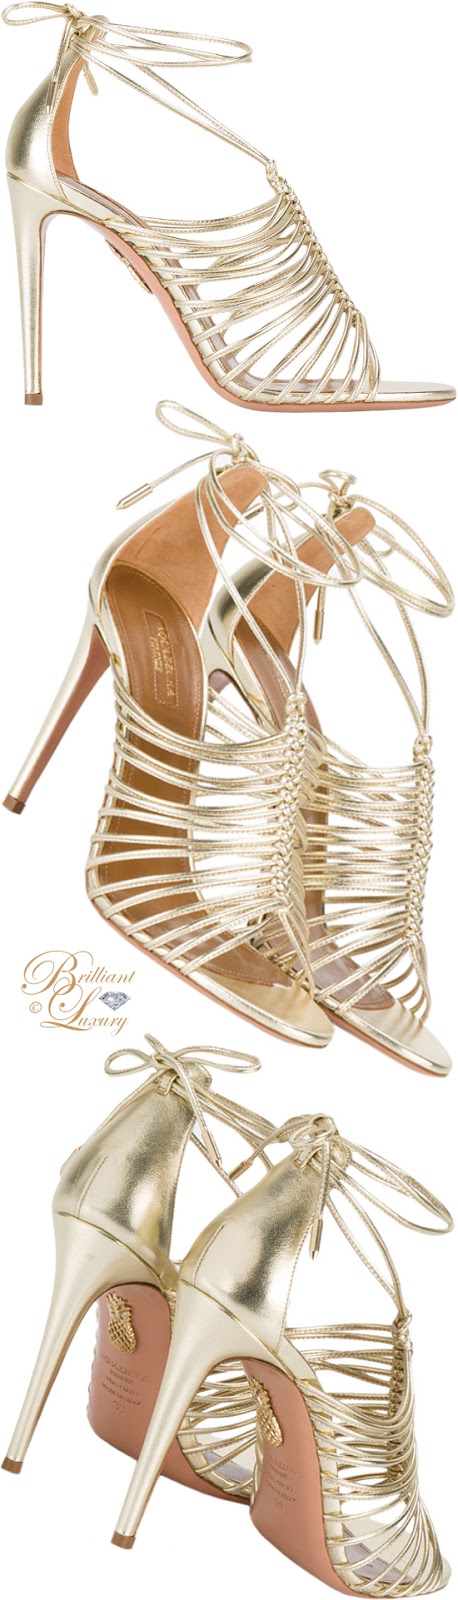 Brilliant Luxury: ♦let it glitz ~ sandals in GOLD